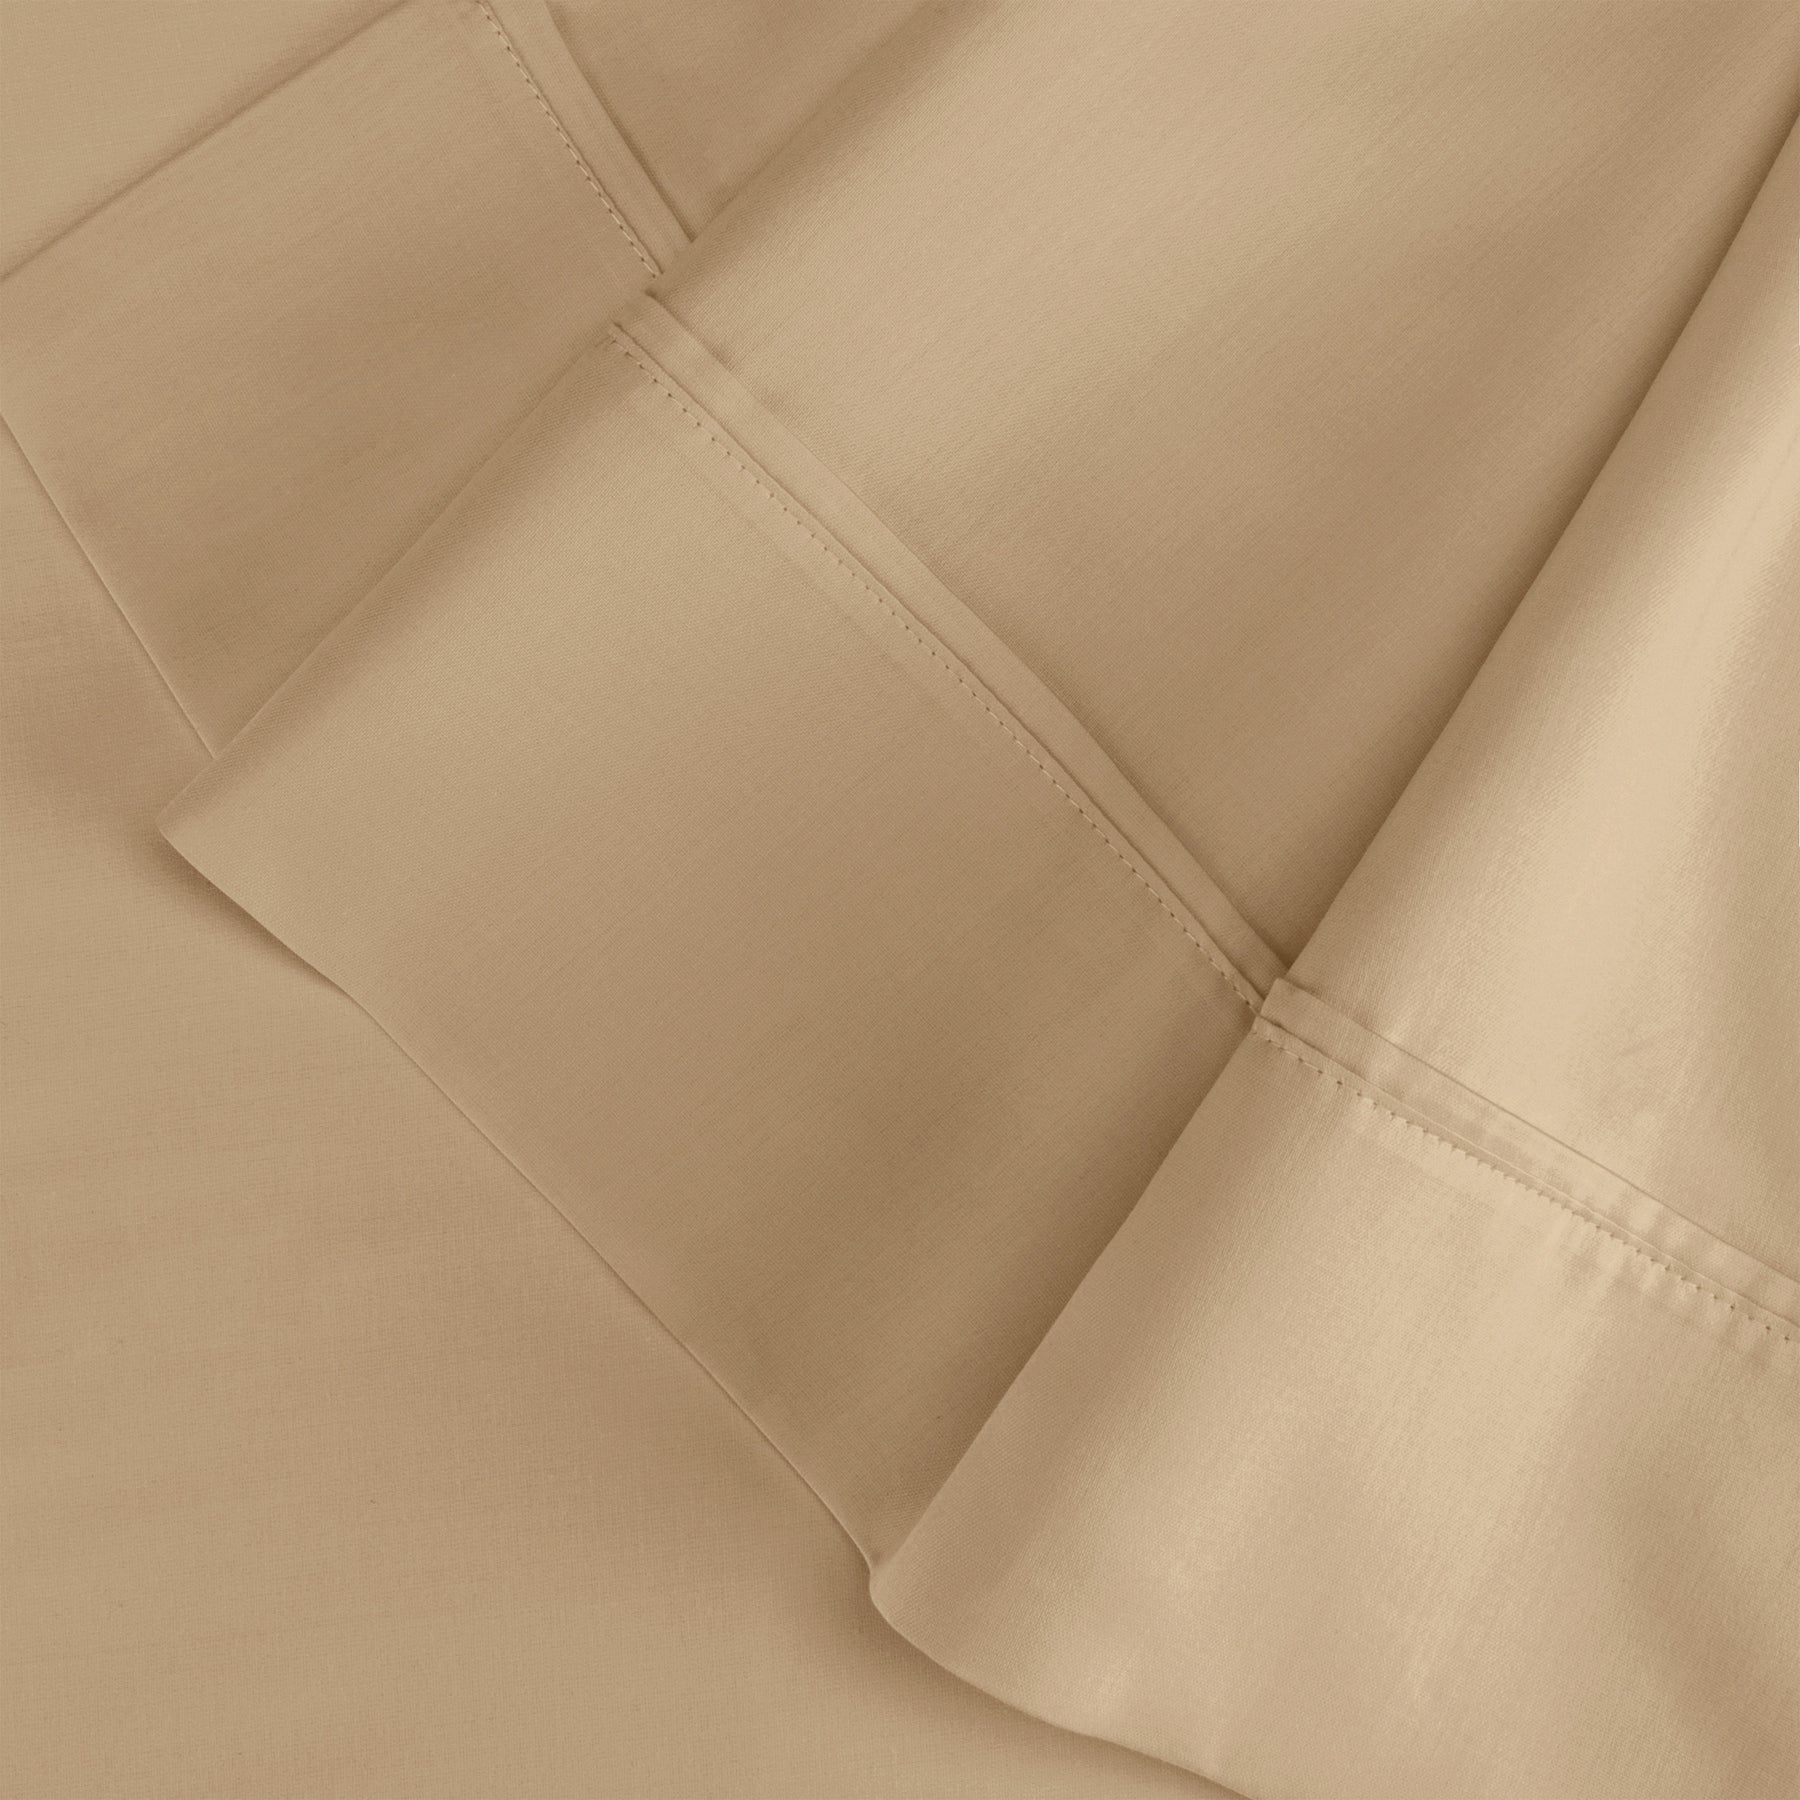 Superior Egyptian Cotton 300 Thread Count Solid Pillowcase Set - Tan